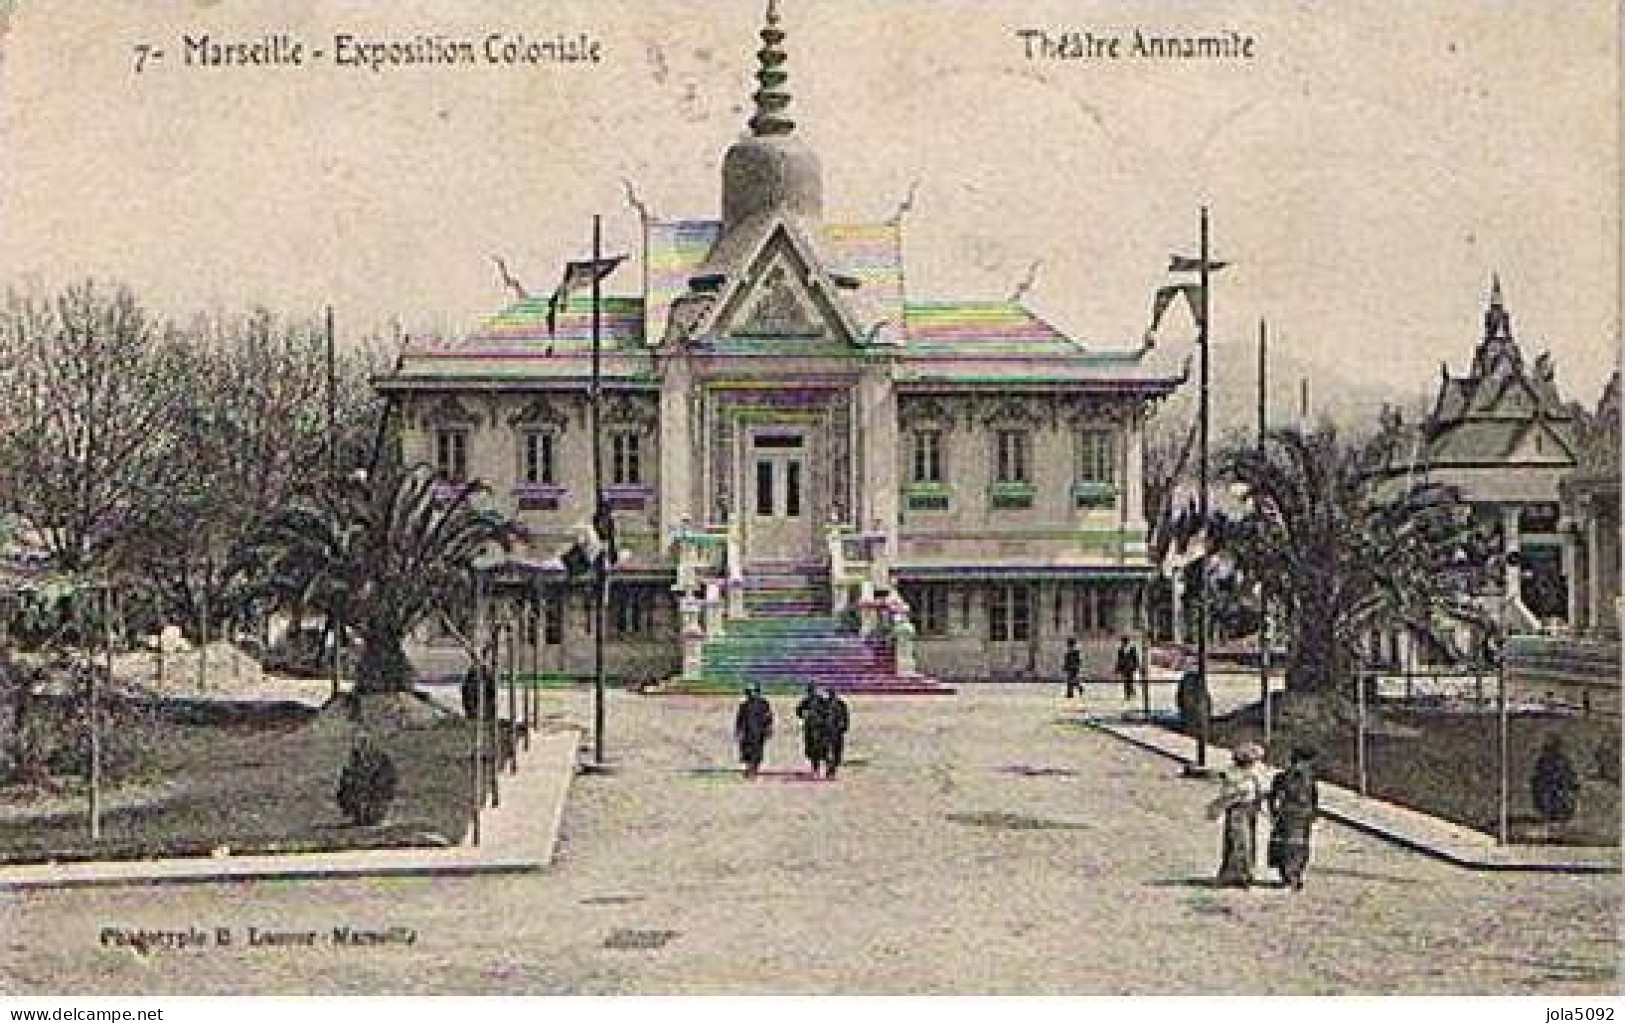 13 - MARSEILLE - Exposition Coloniale - Théâtre Annamite - Colonial Exhibitions 1906 - 1922